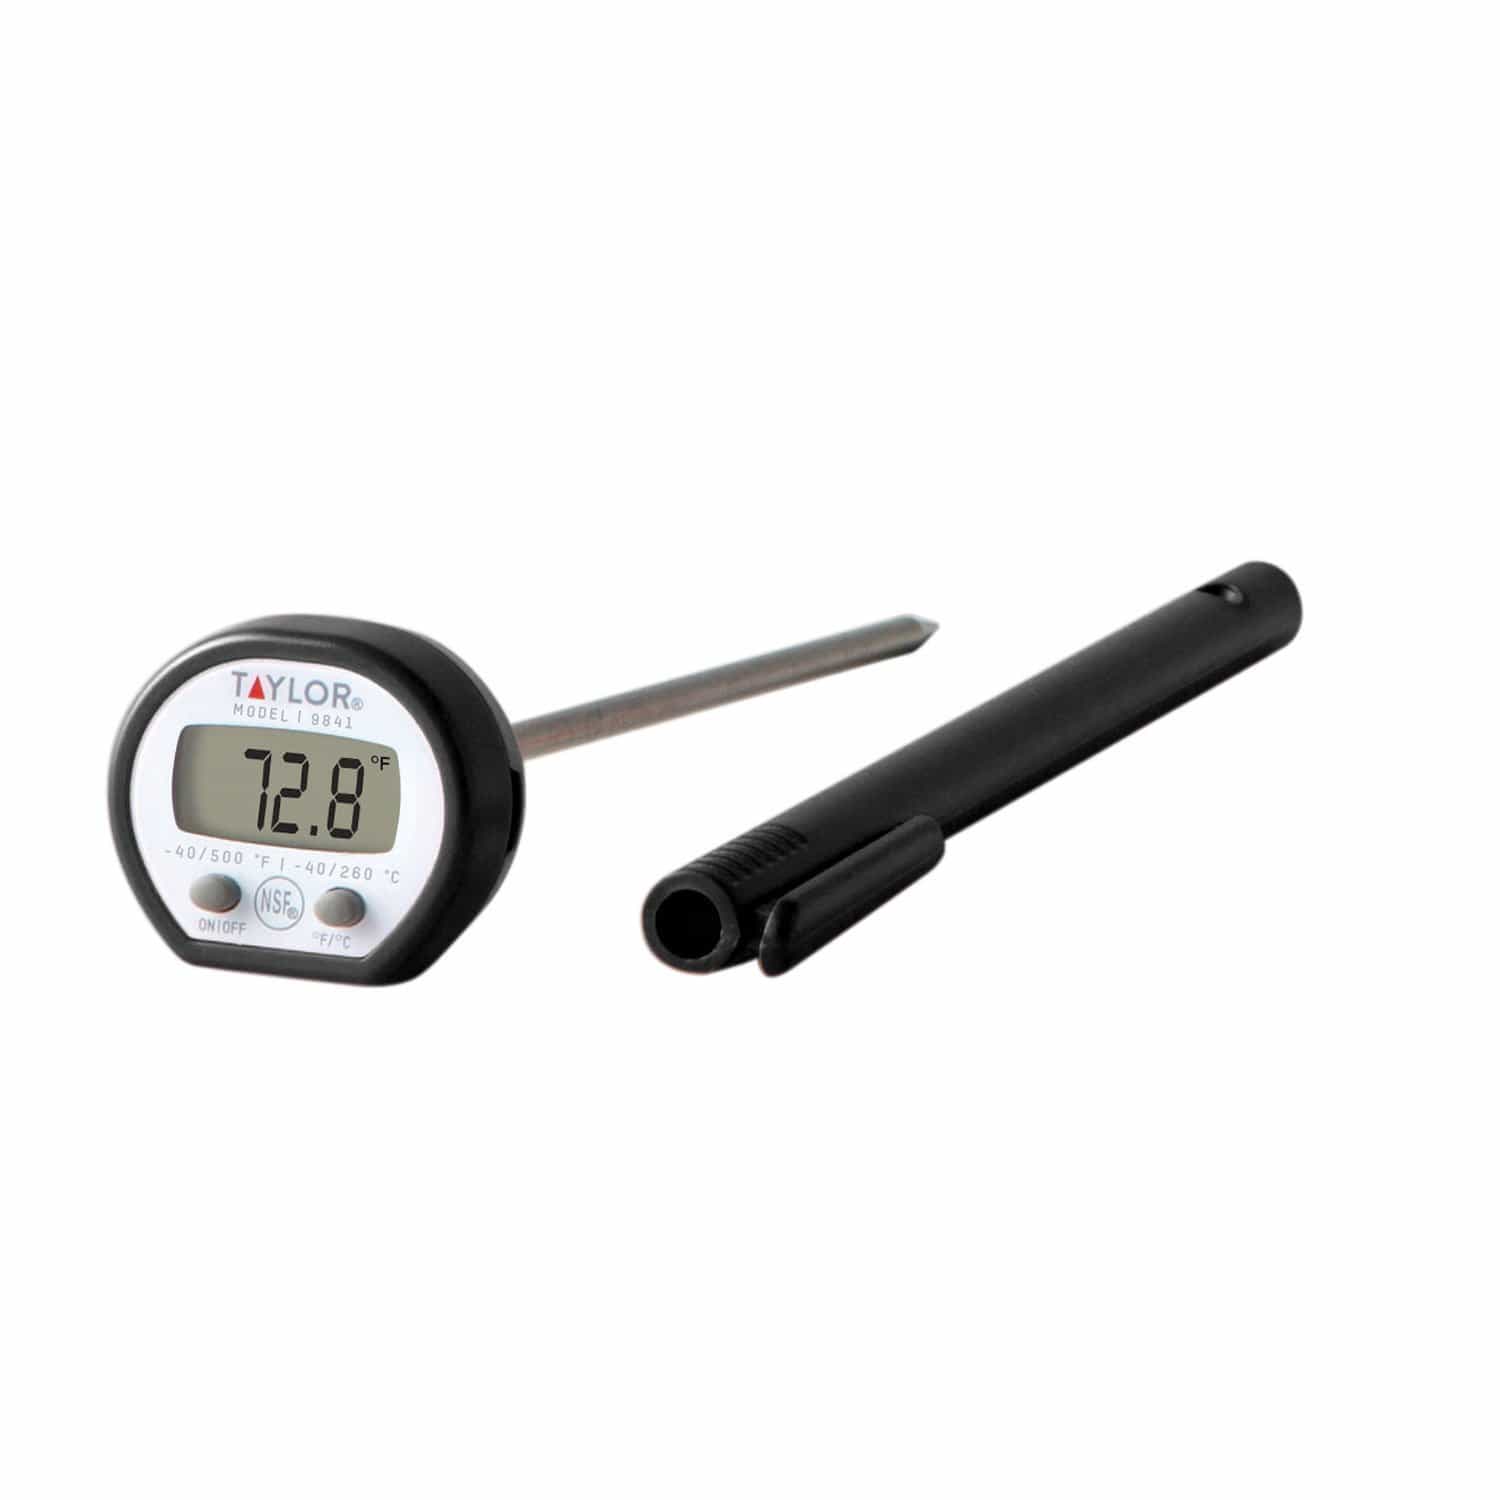 Taylor® Thermometer-Maximum-Minimum Thermometer